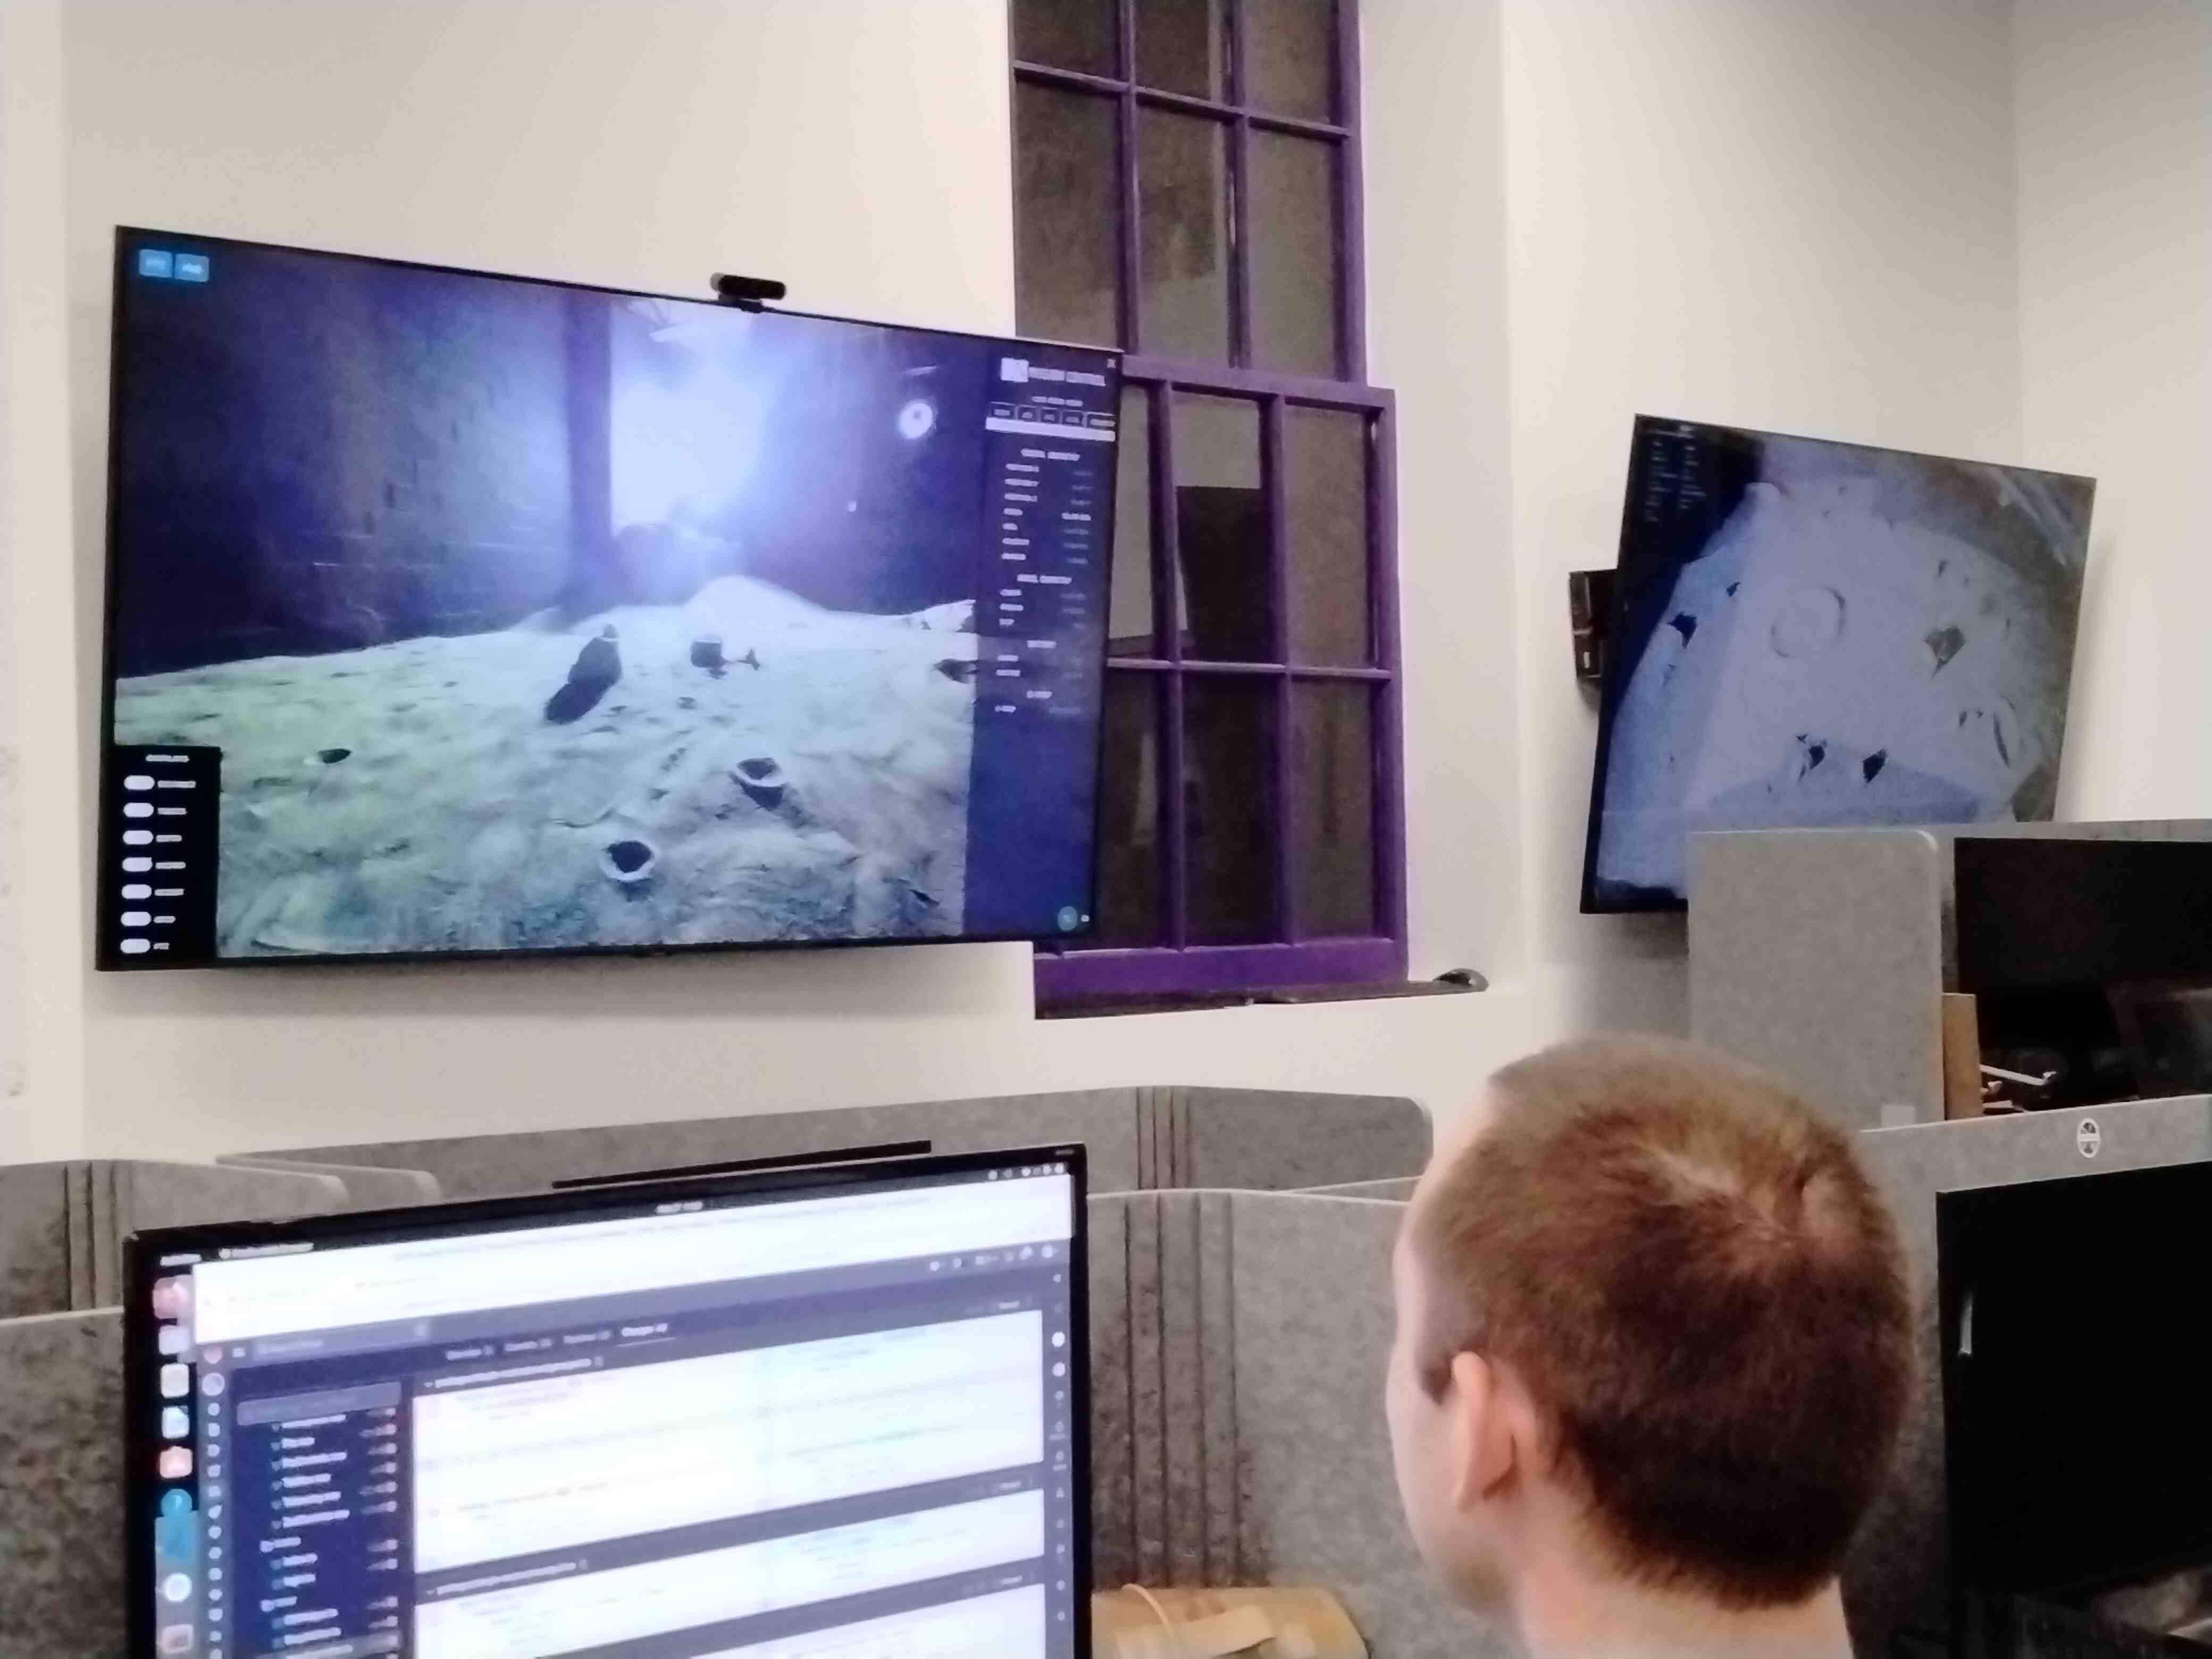 Clearpath Robotics的月球车Max正在加拿大渥太华一个类似月球的设施中进行测试